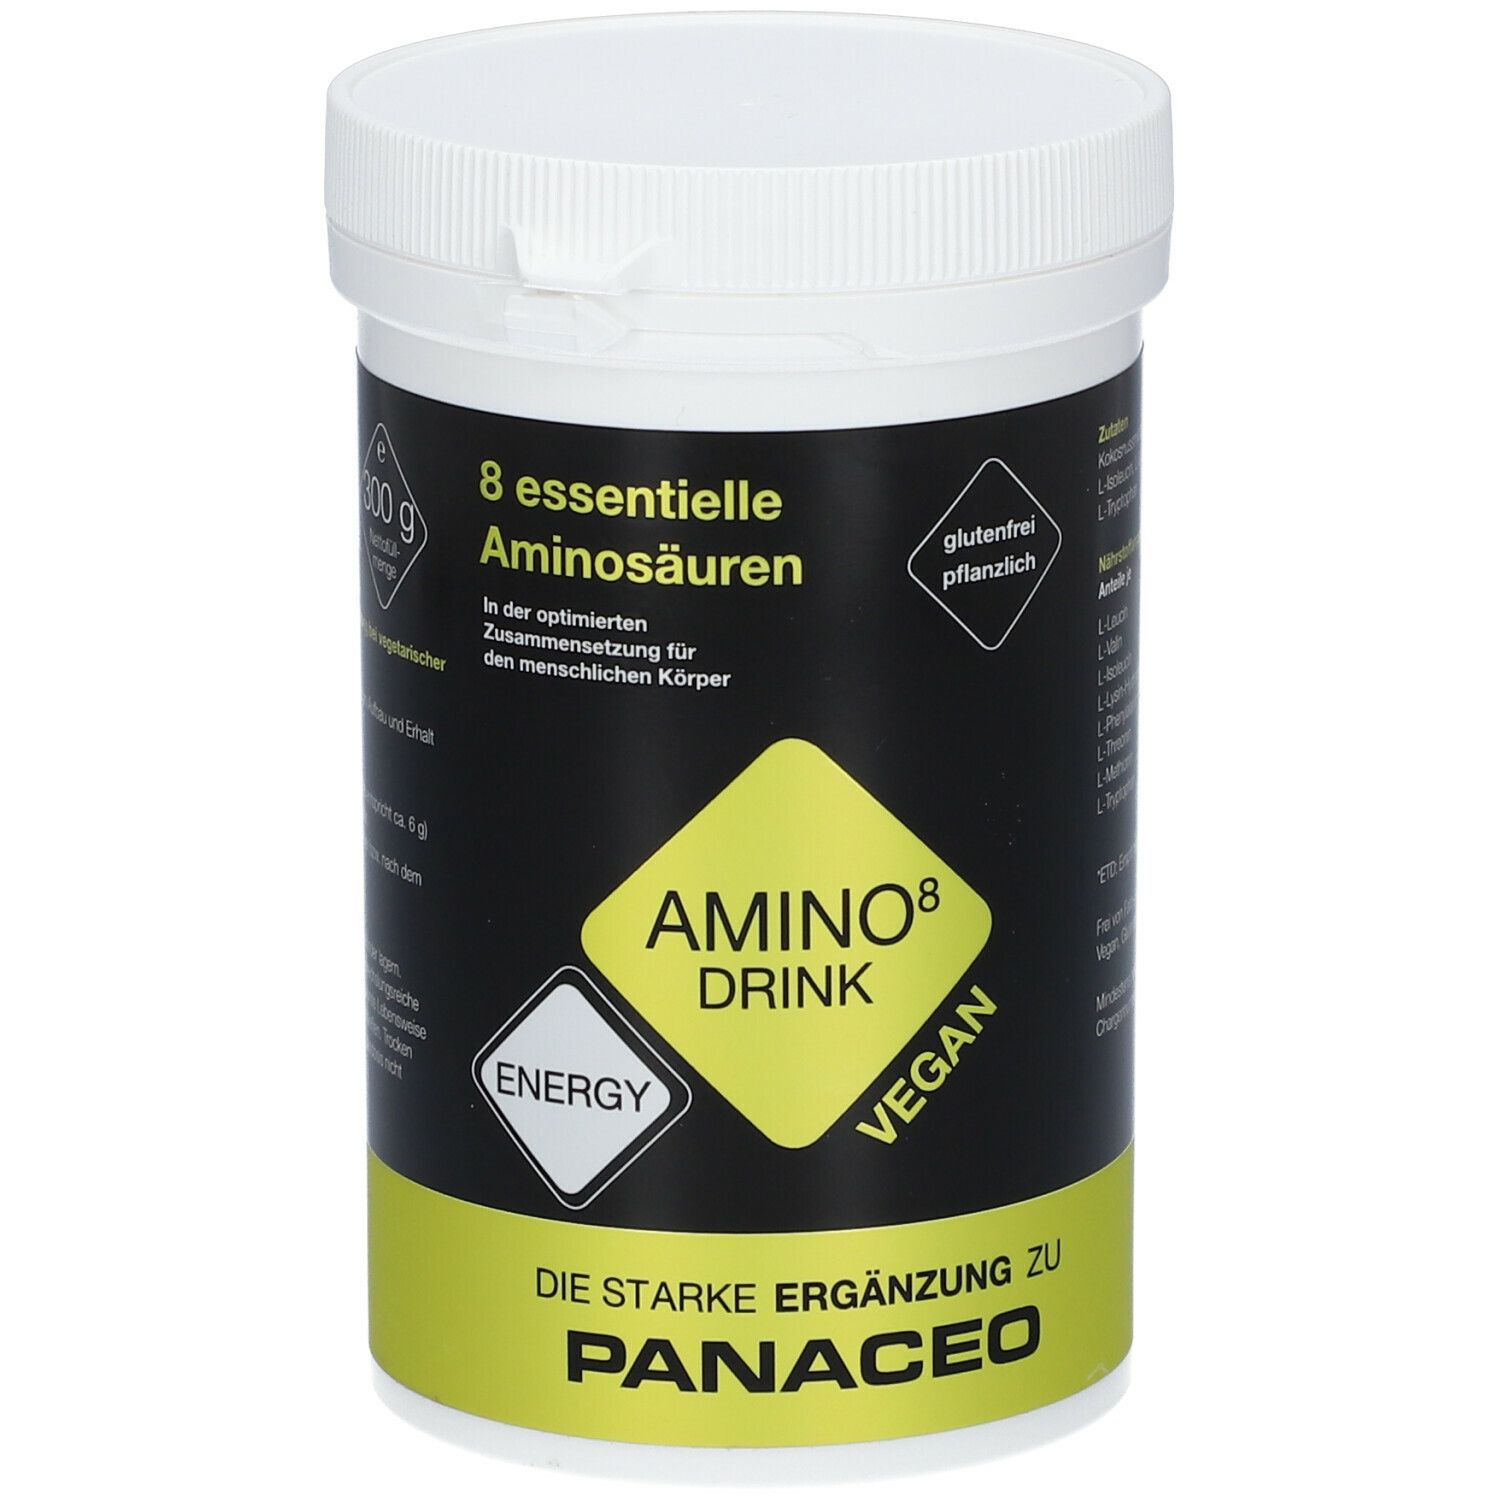 Image of PANACEO ENERGY AMINO8 DRINK